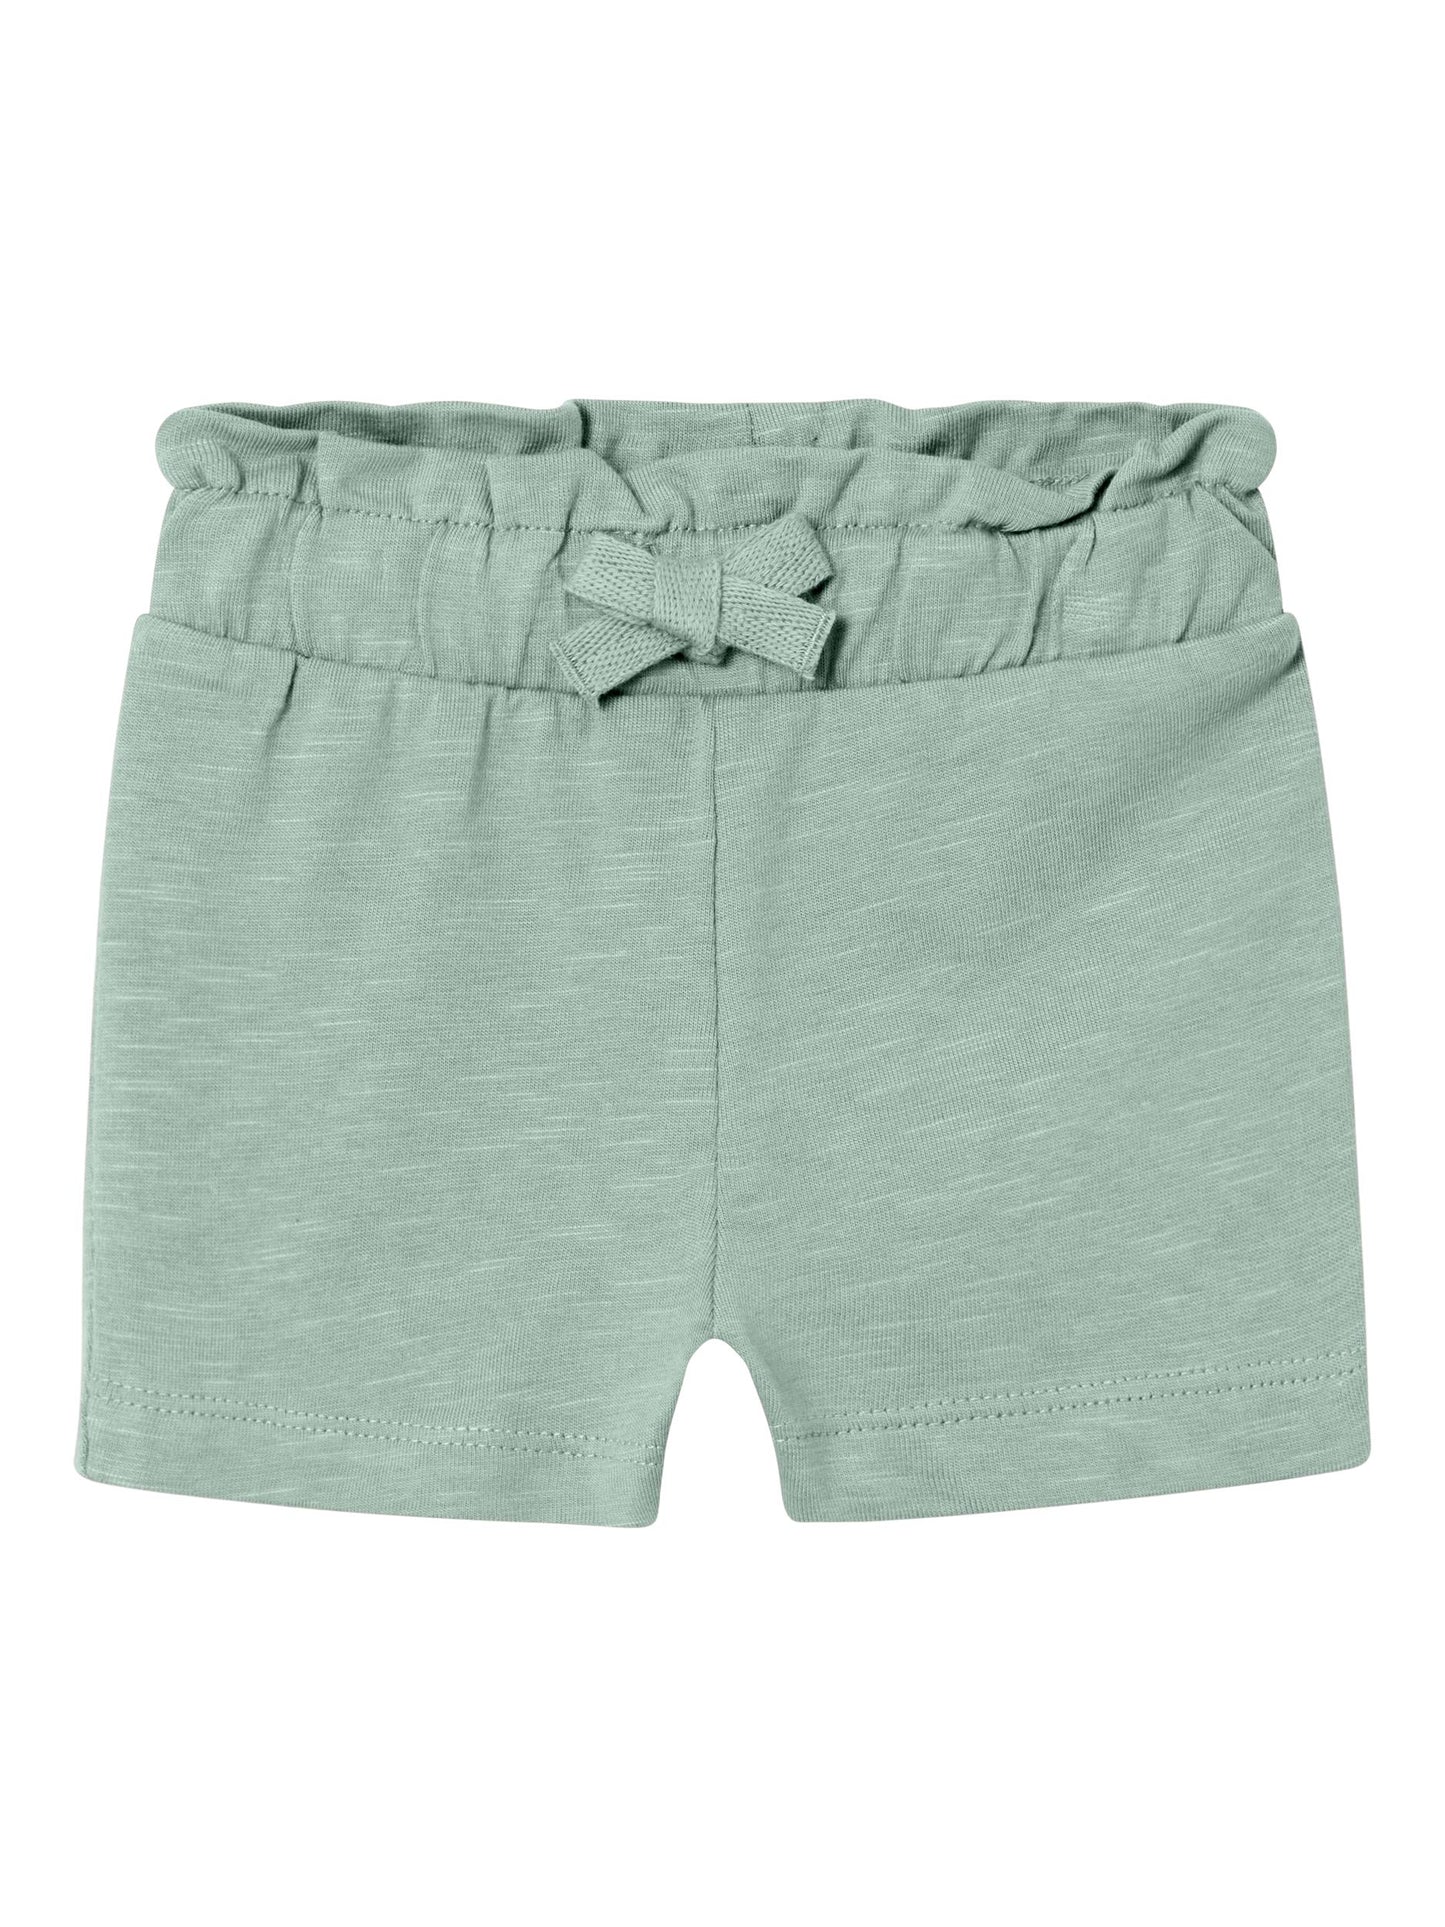 Name it - Hubbi shorts - Silt green